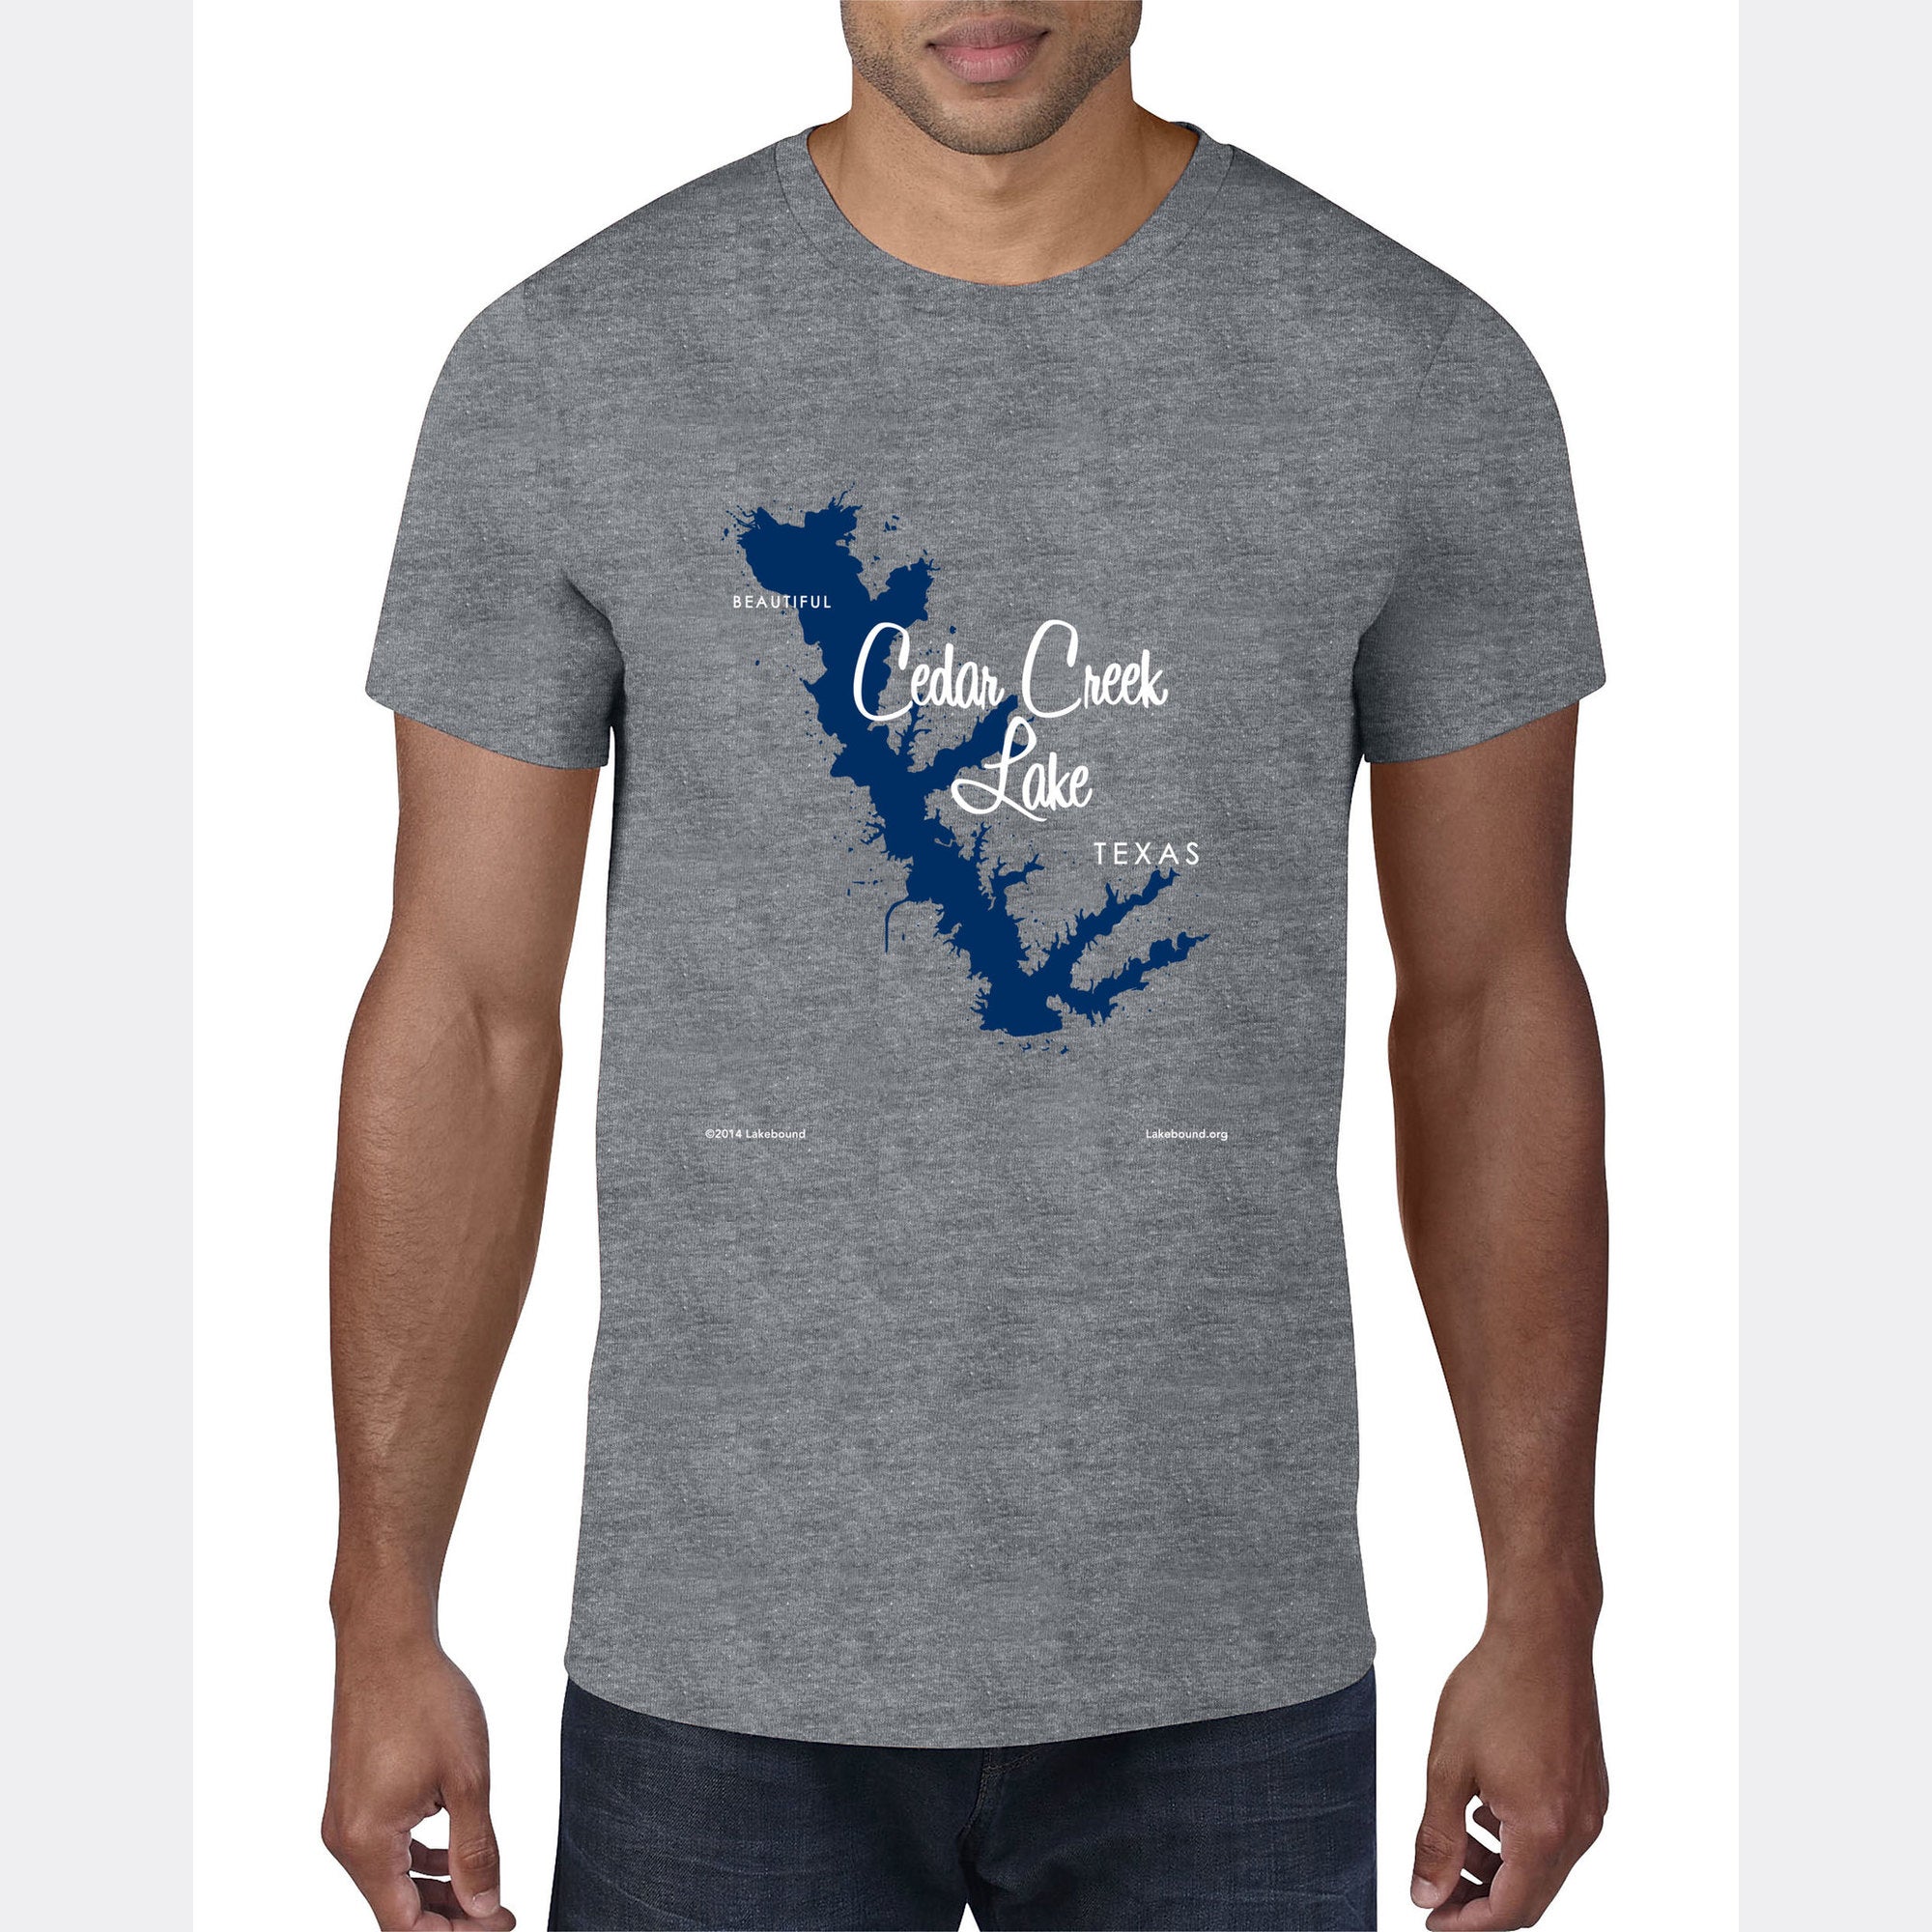 Cedar Creek Lake Texas, T-Shirt